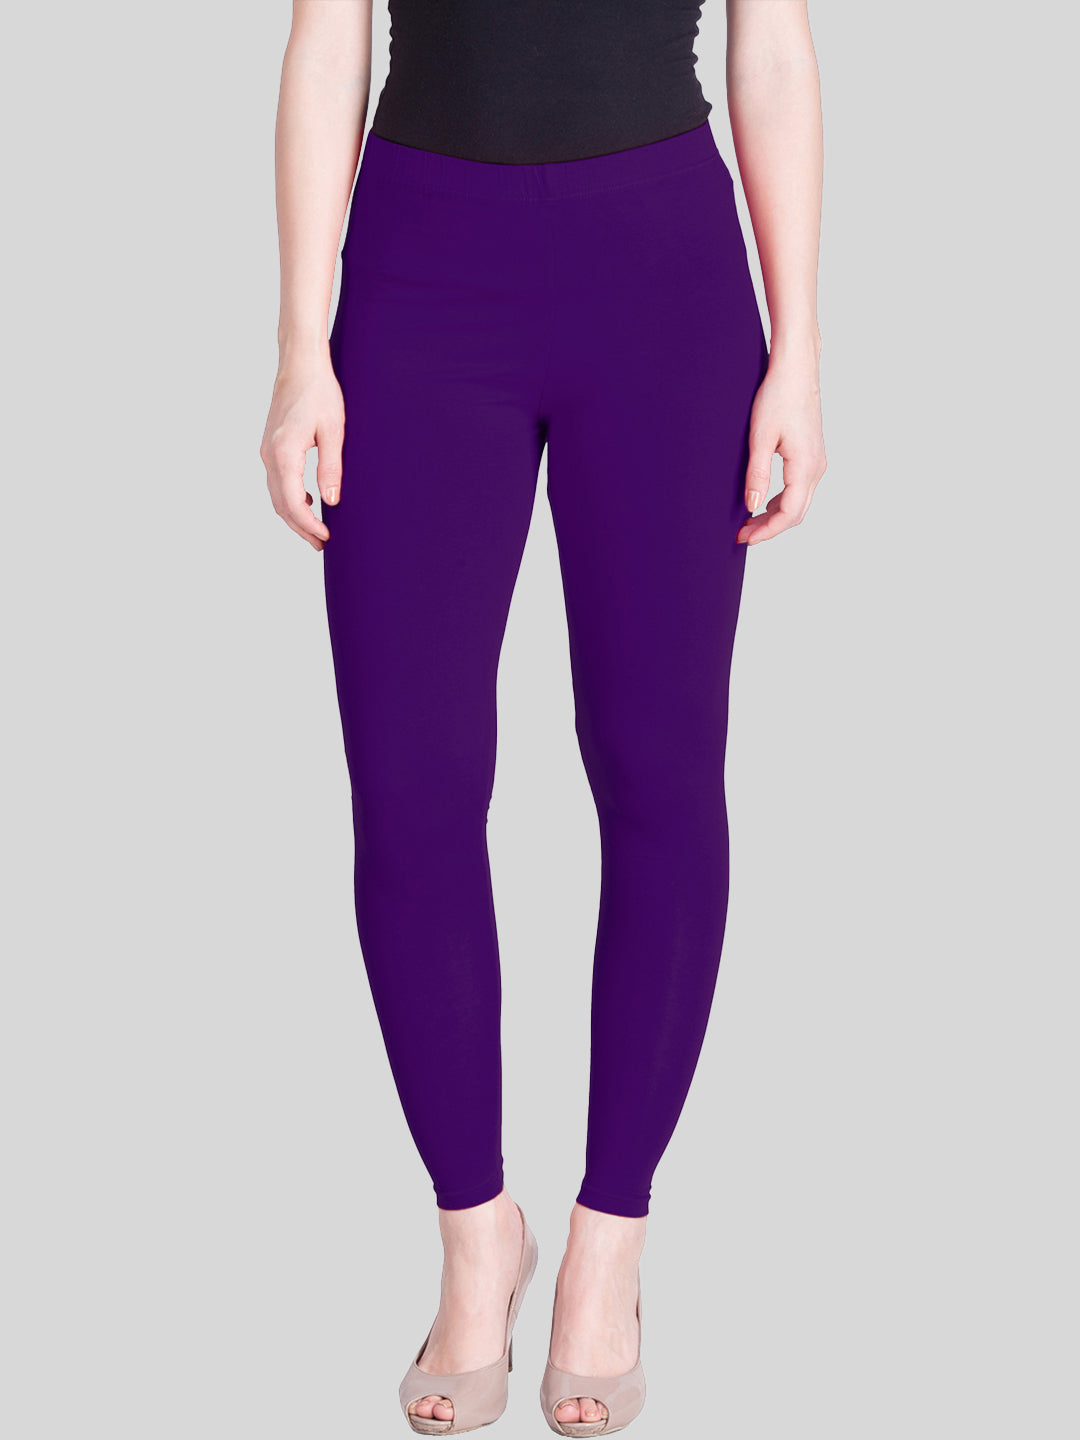 Casual Solid Regular Violet Purple Plus Size Leggings (Women's) 